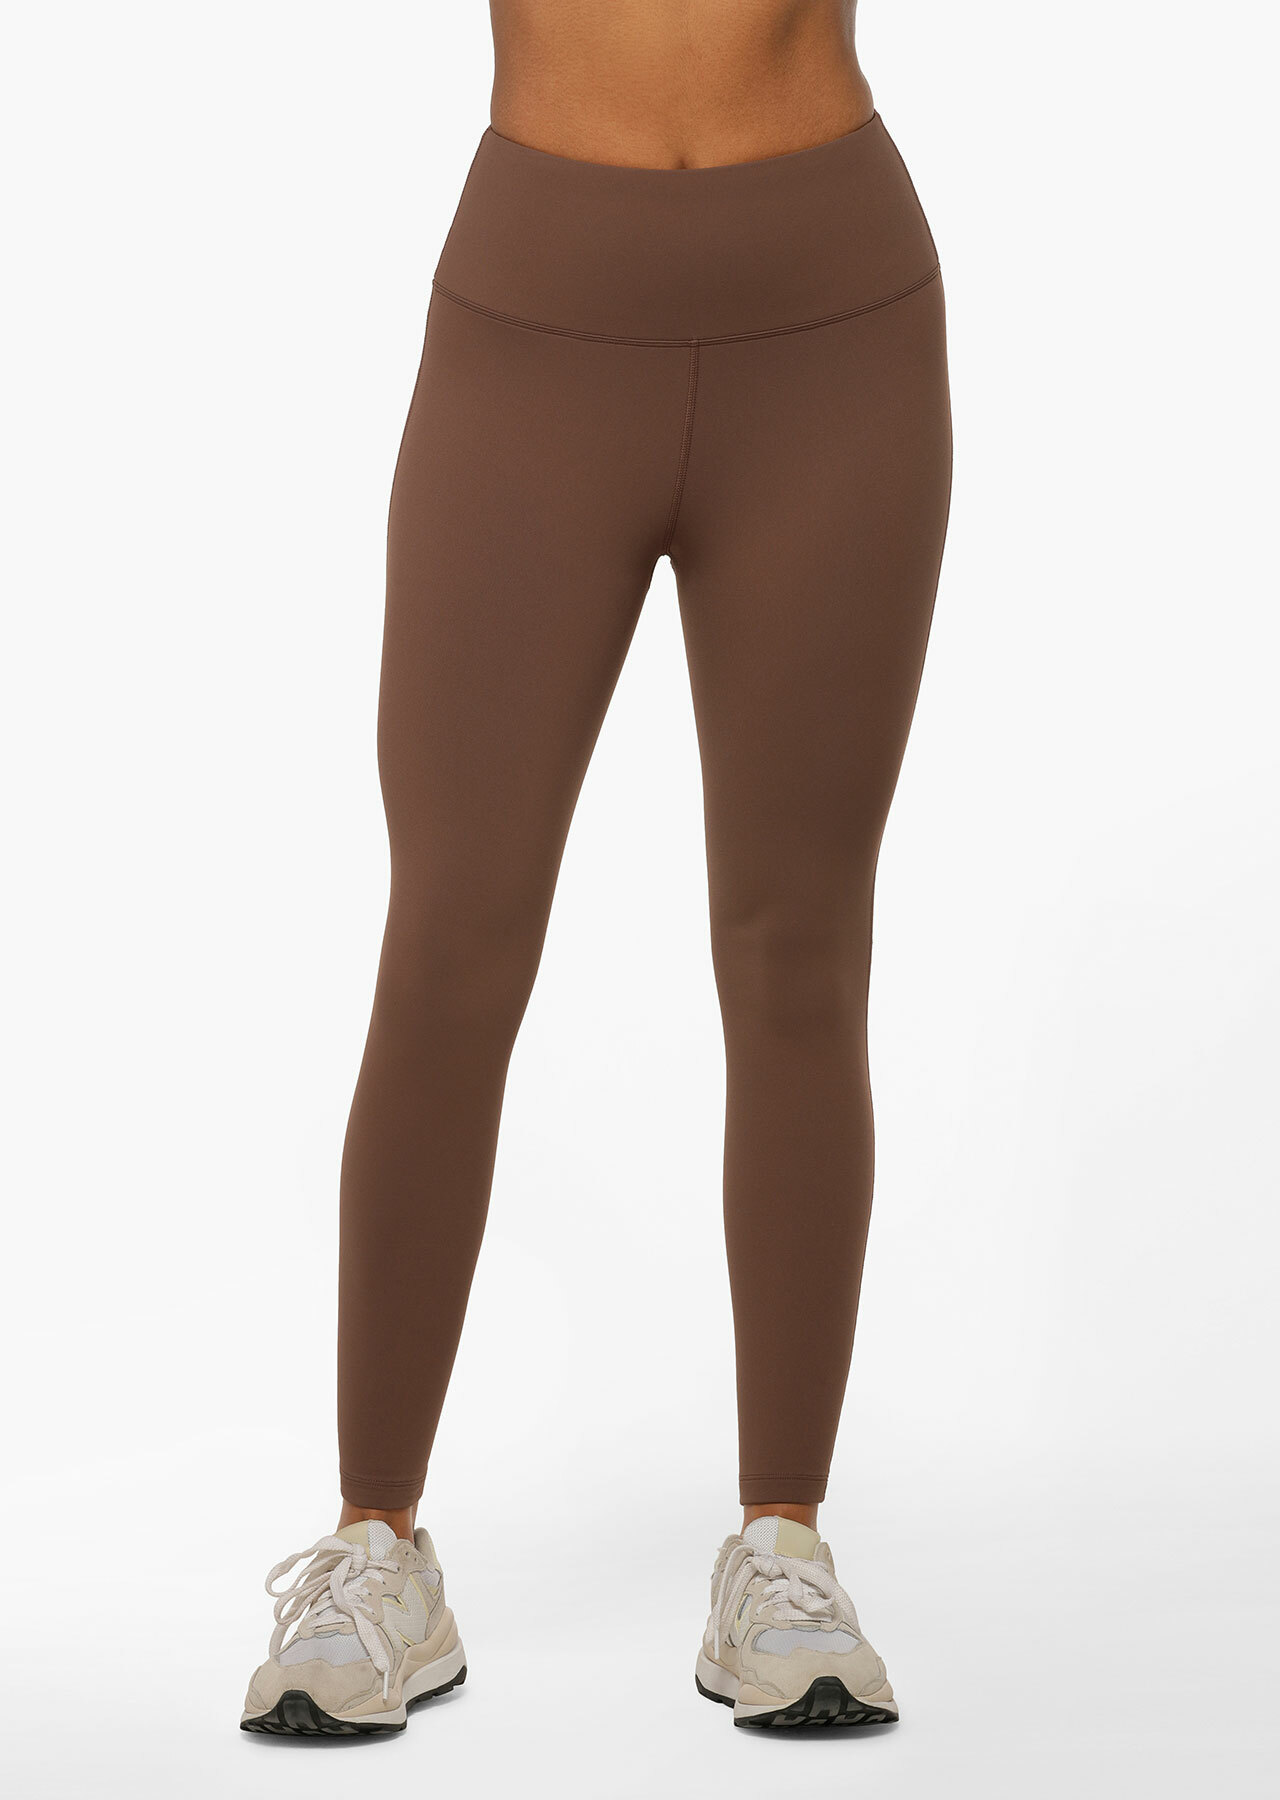 Thermal Legging Warm Pants,Brown Tights Plus Size,Dark Brown